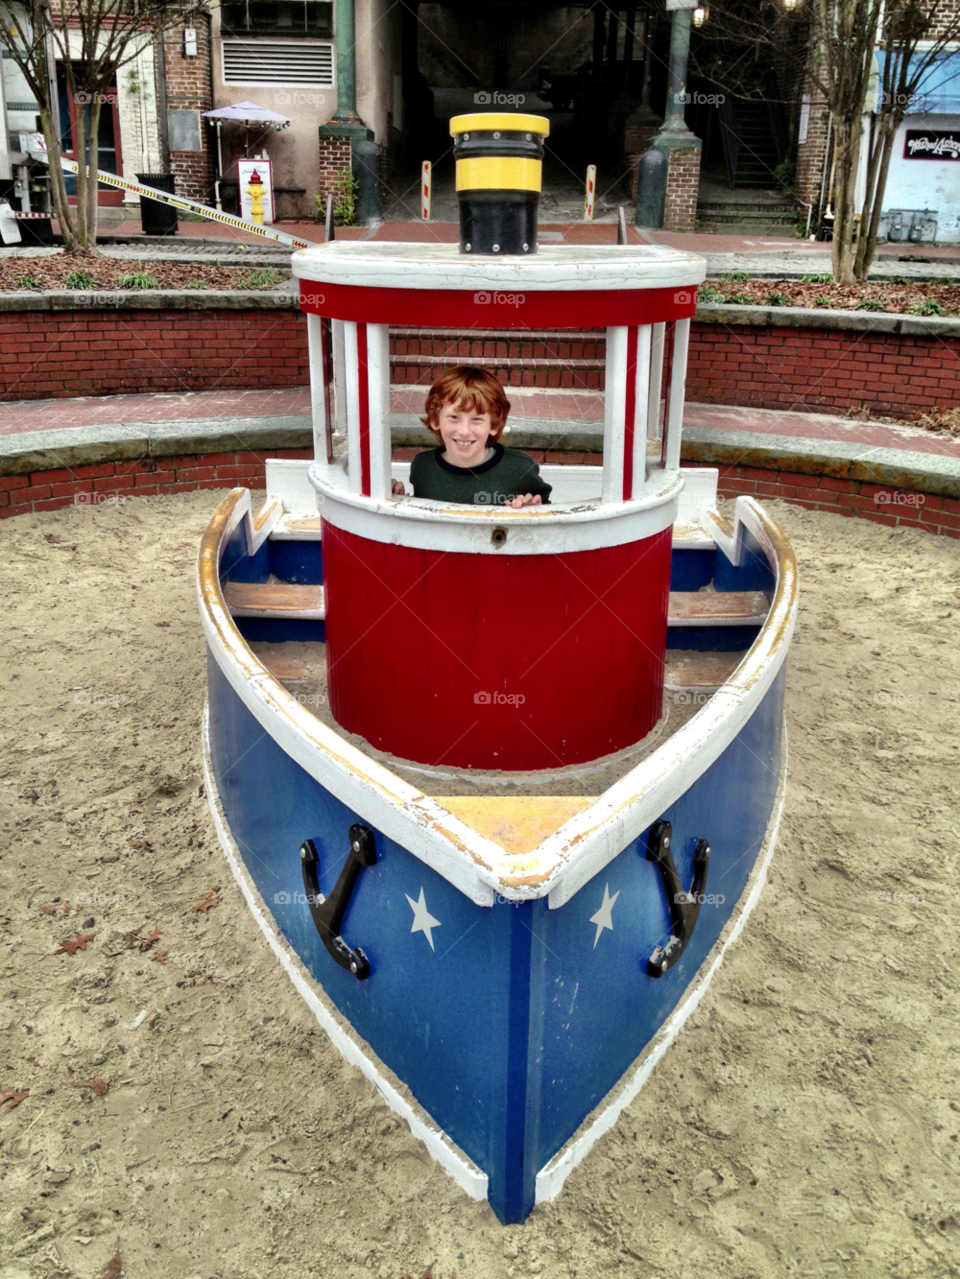 play boy boat savannah by bcpix